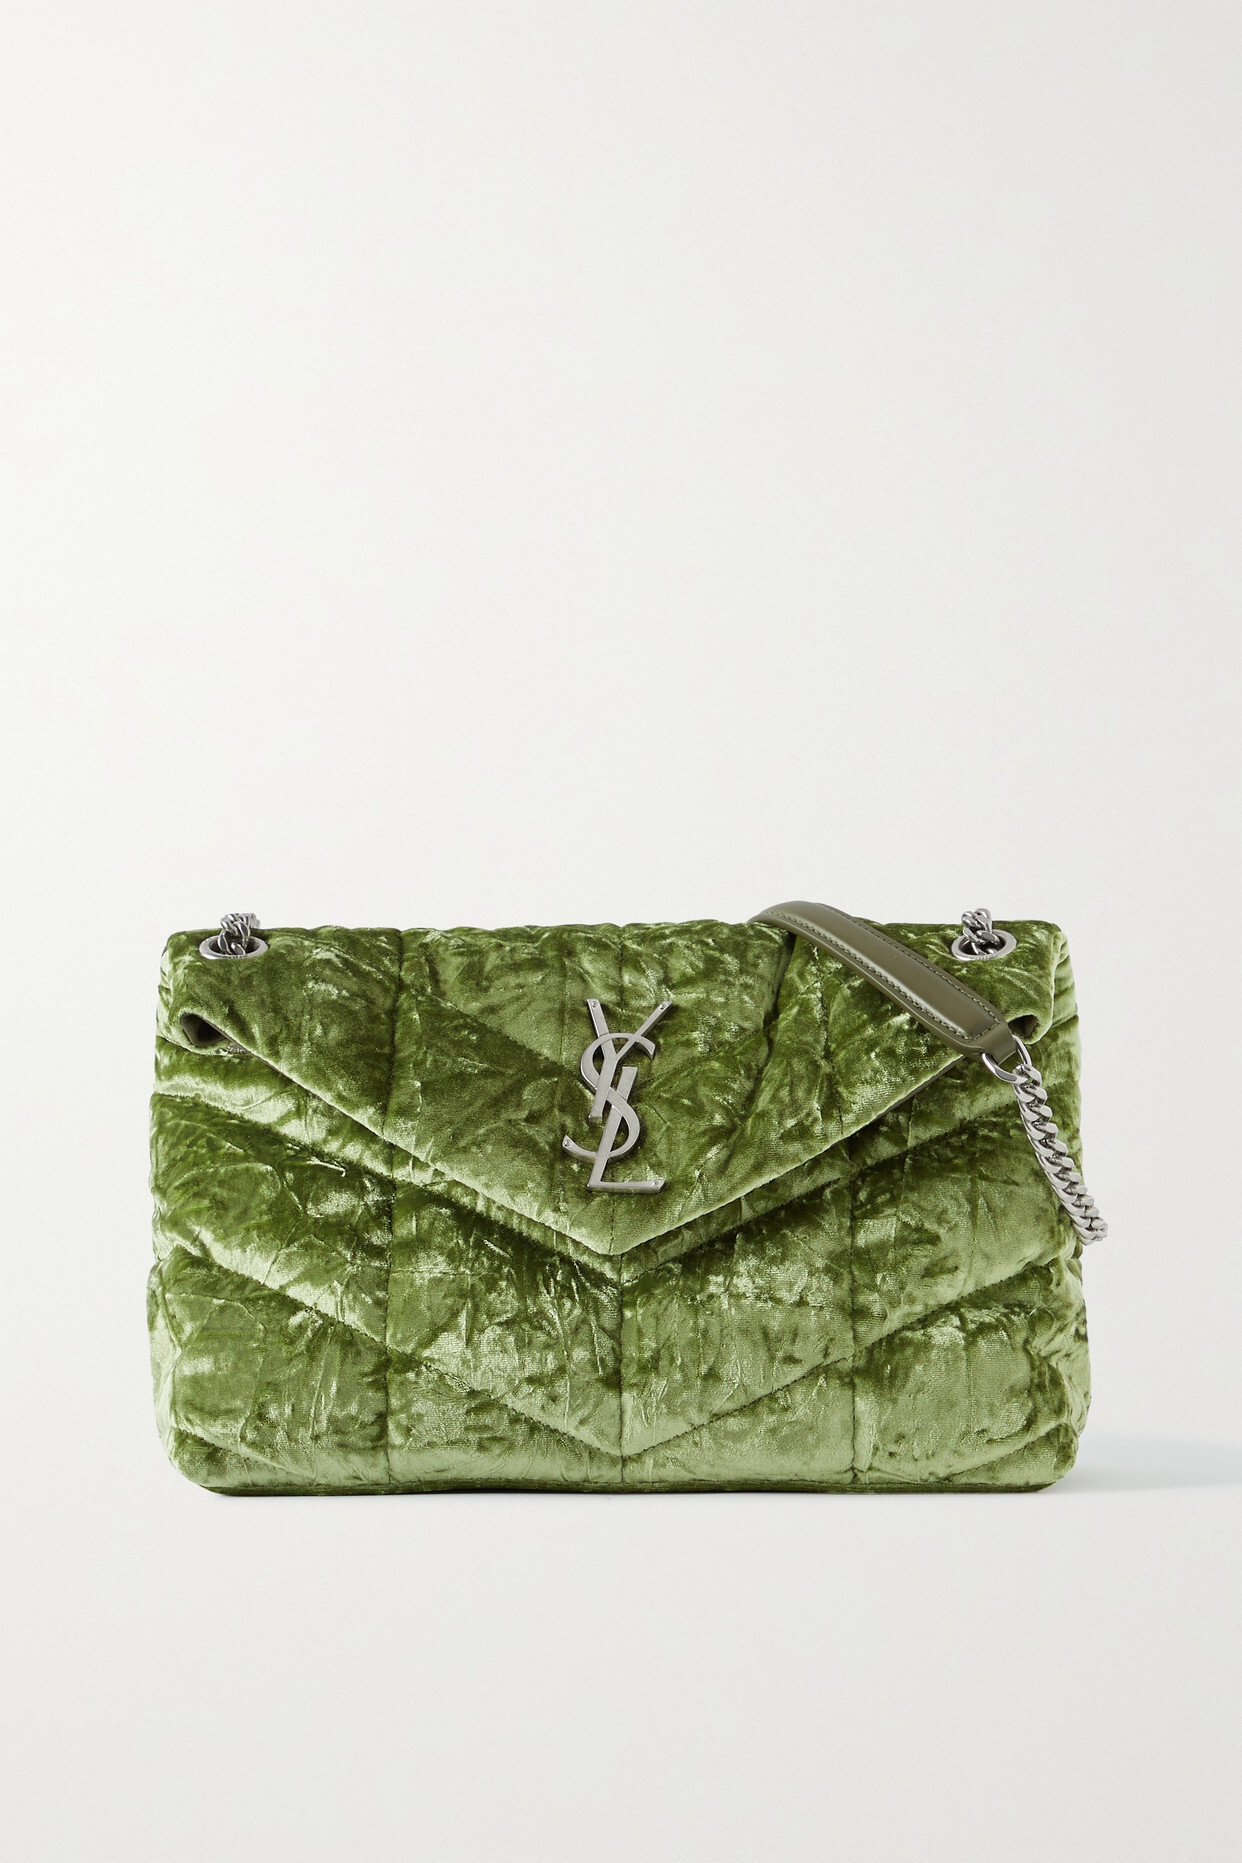 SAINT LAURENT - Loulou Puffer Small Quilted Velvet Shoulder Bag - Green